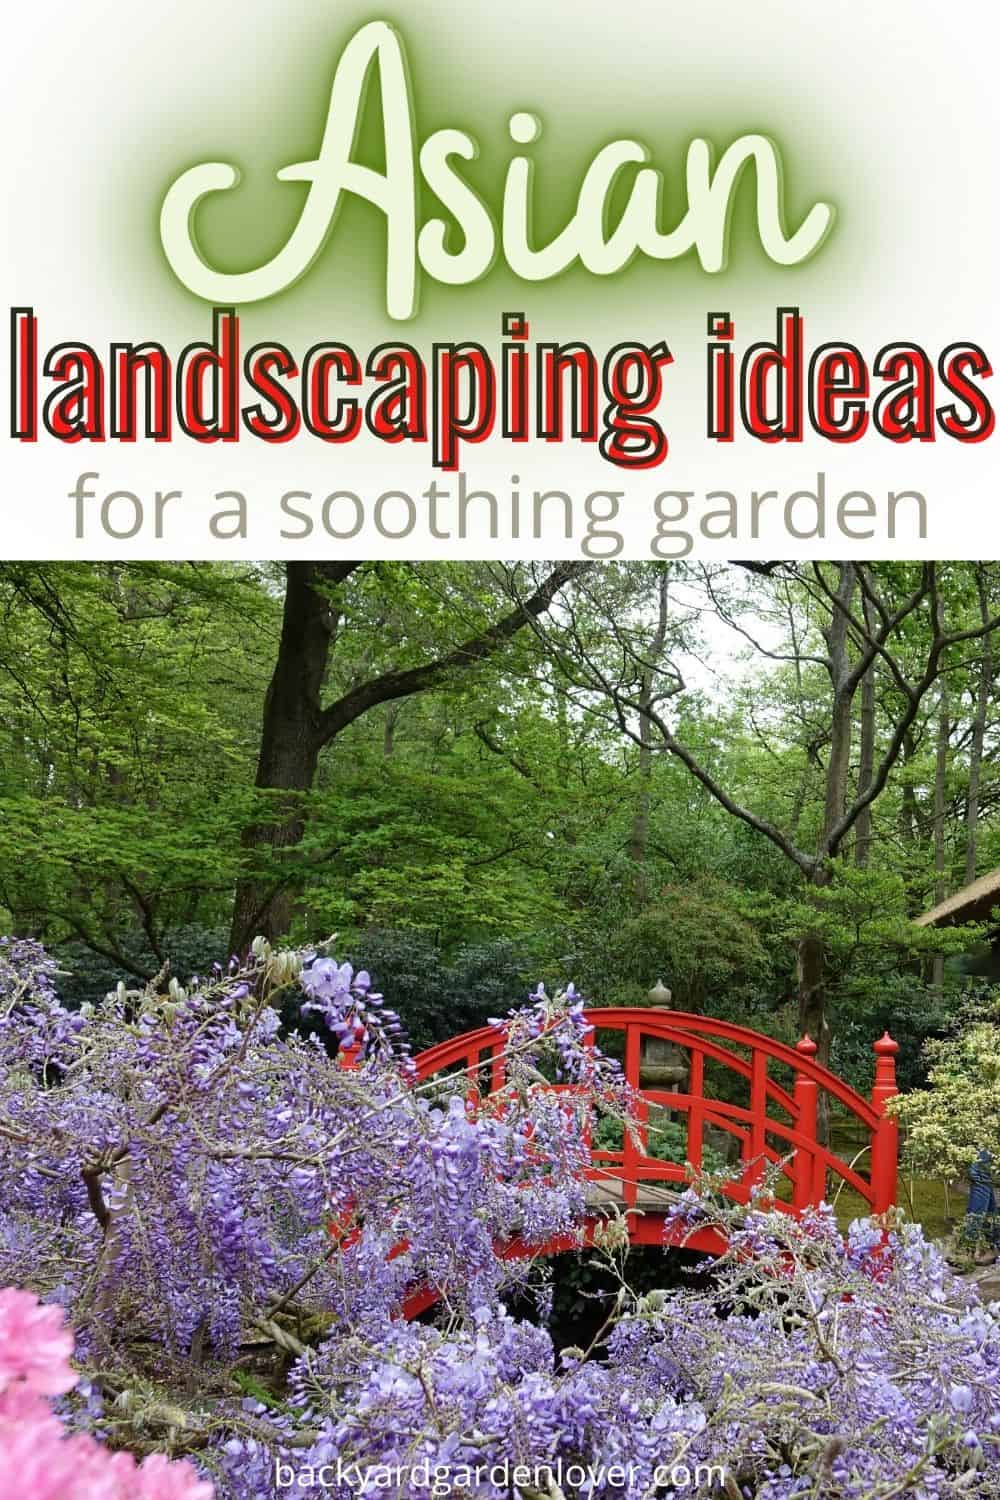 Asian backyard landscaping ideas - Pinterest image